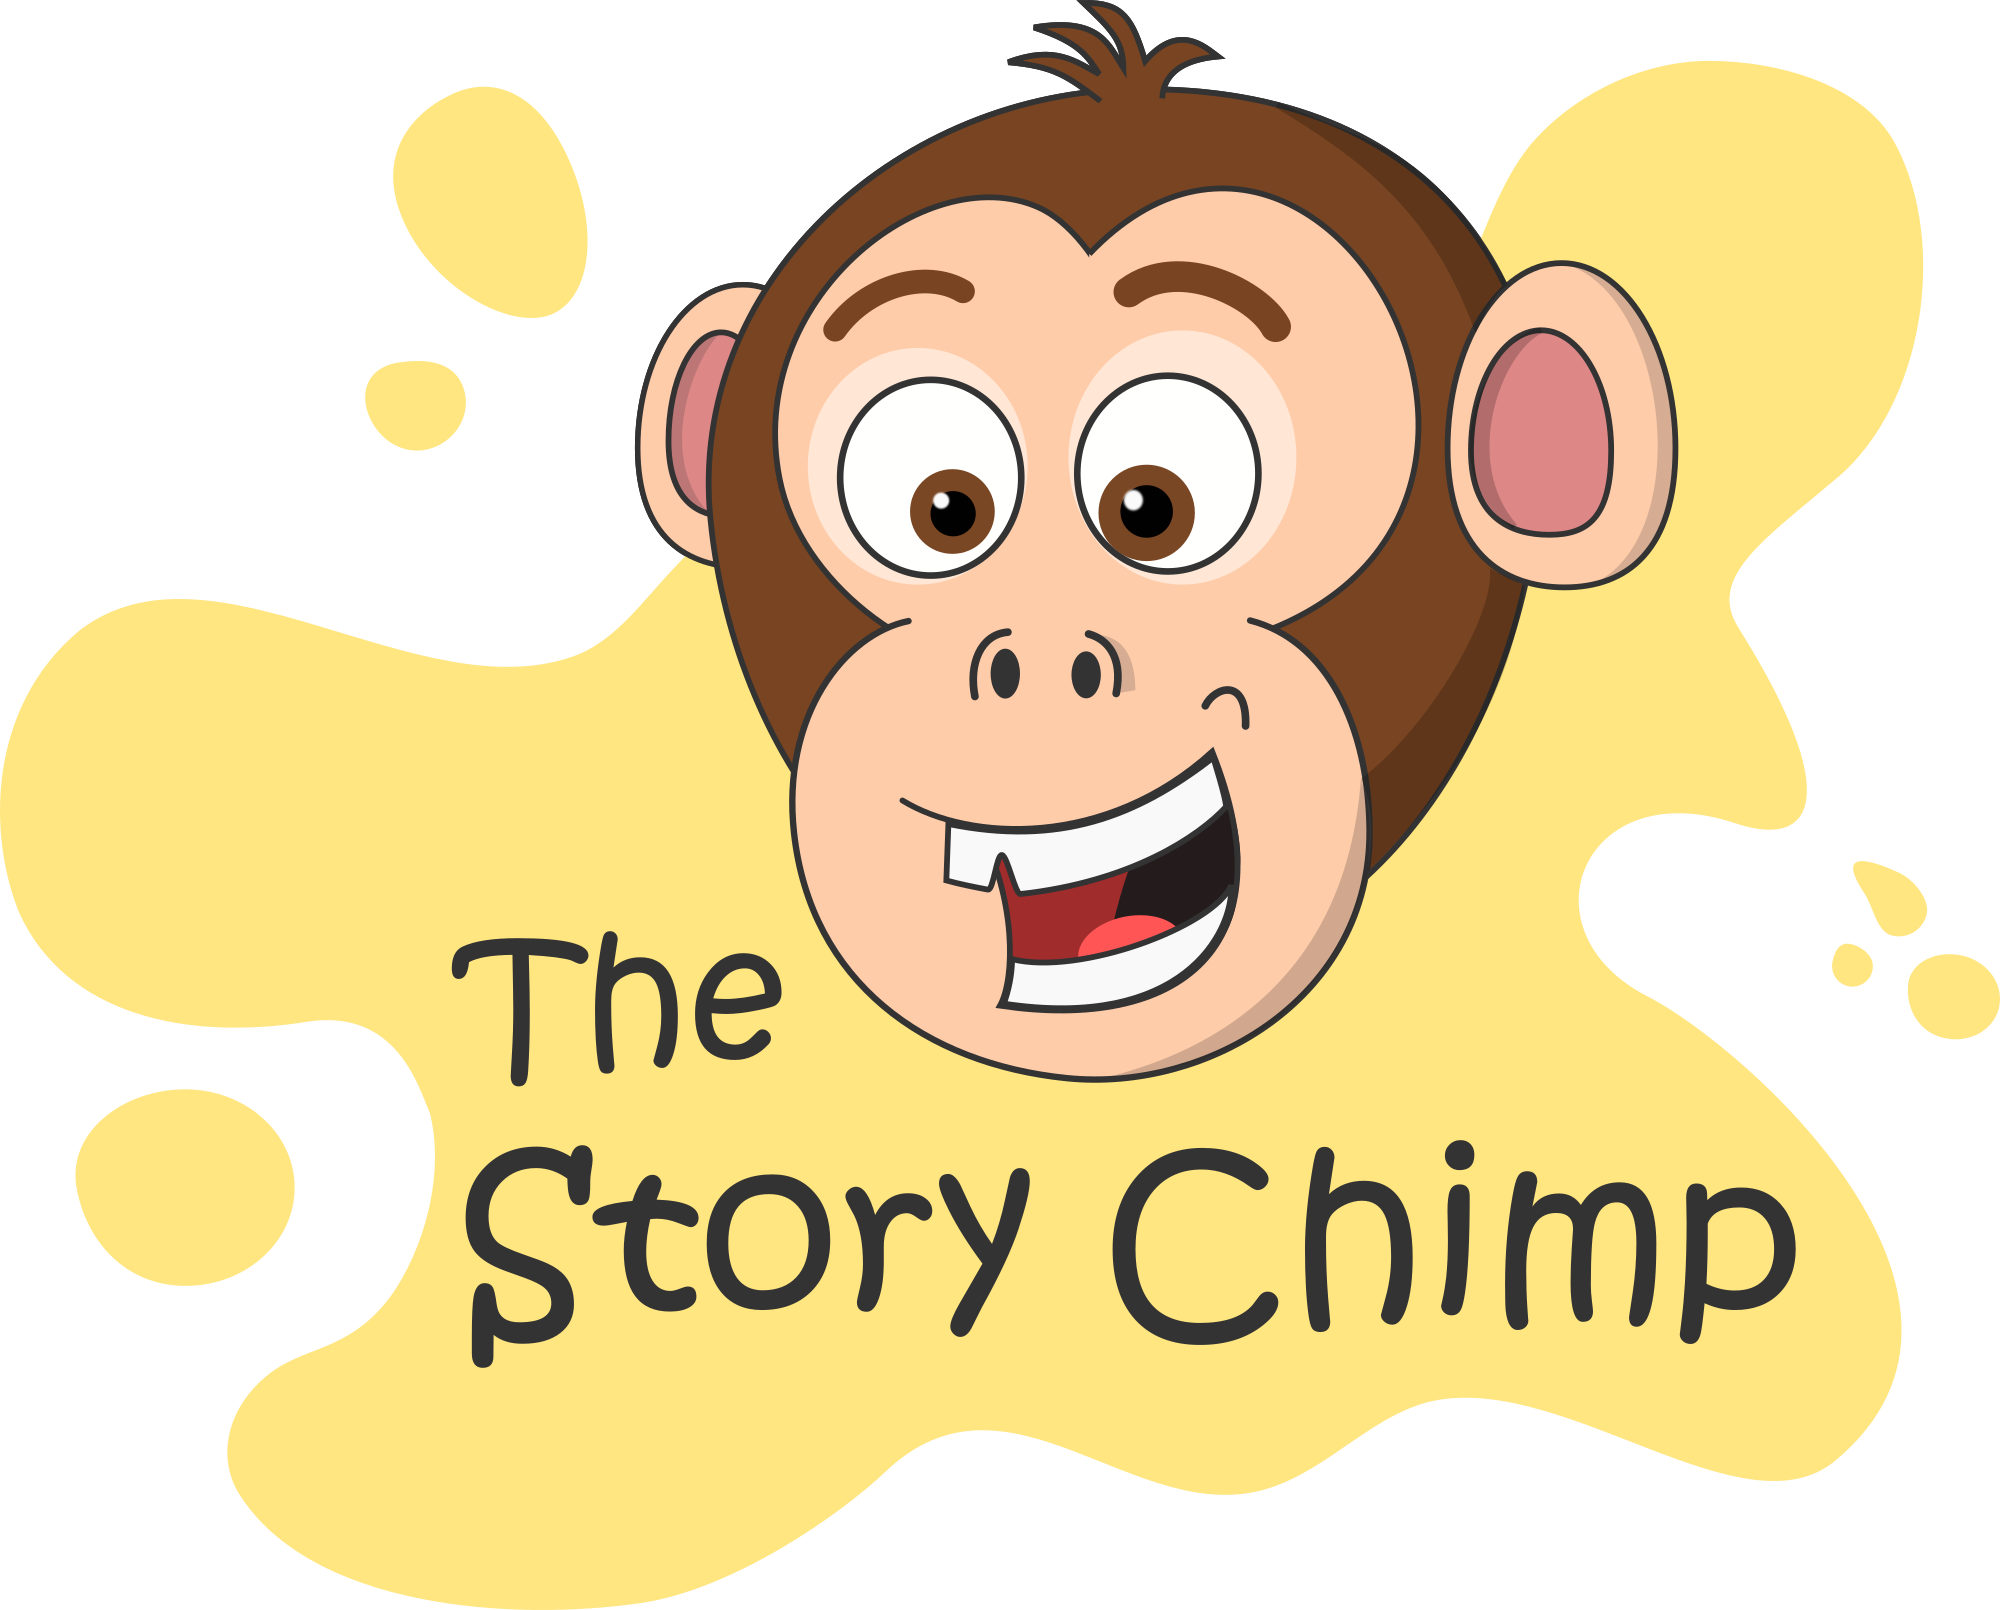 The Story Chimp